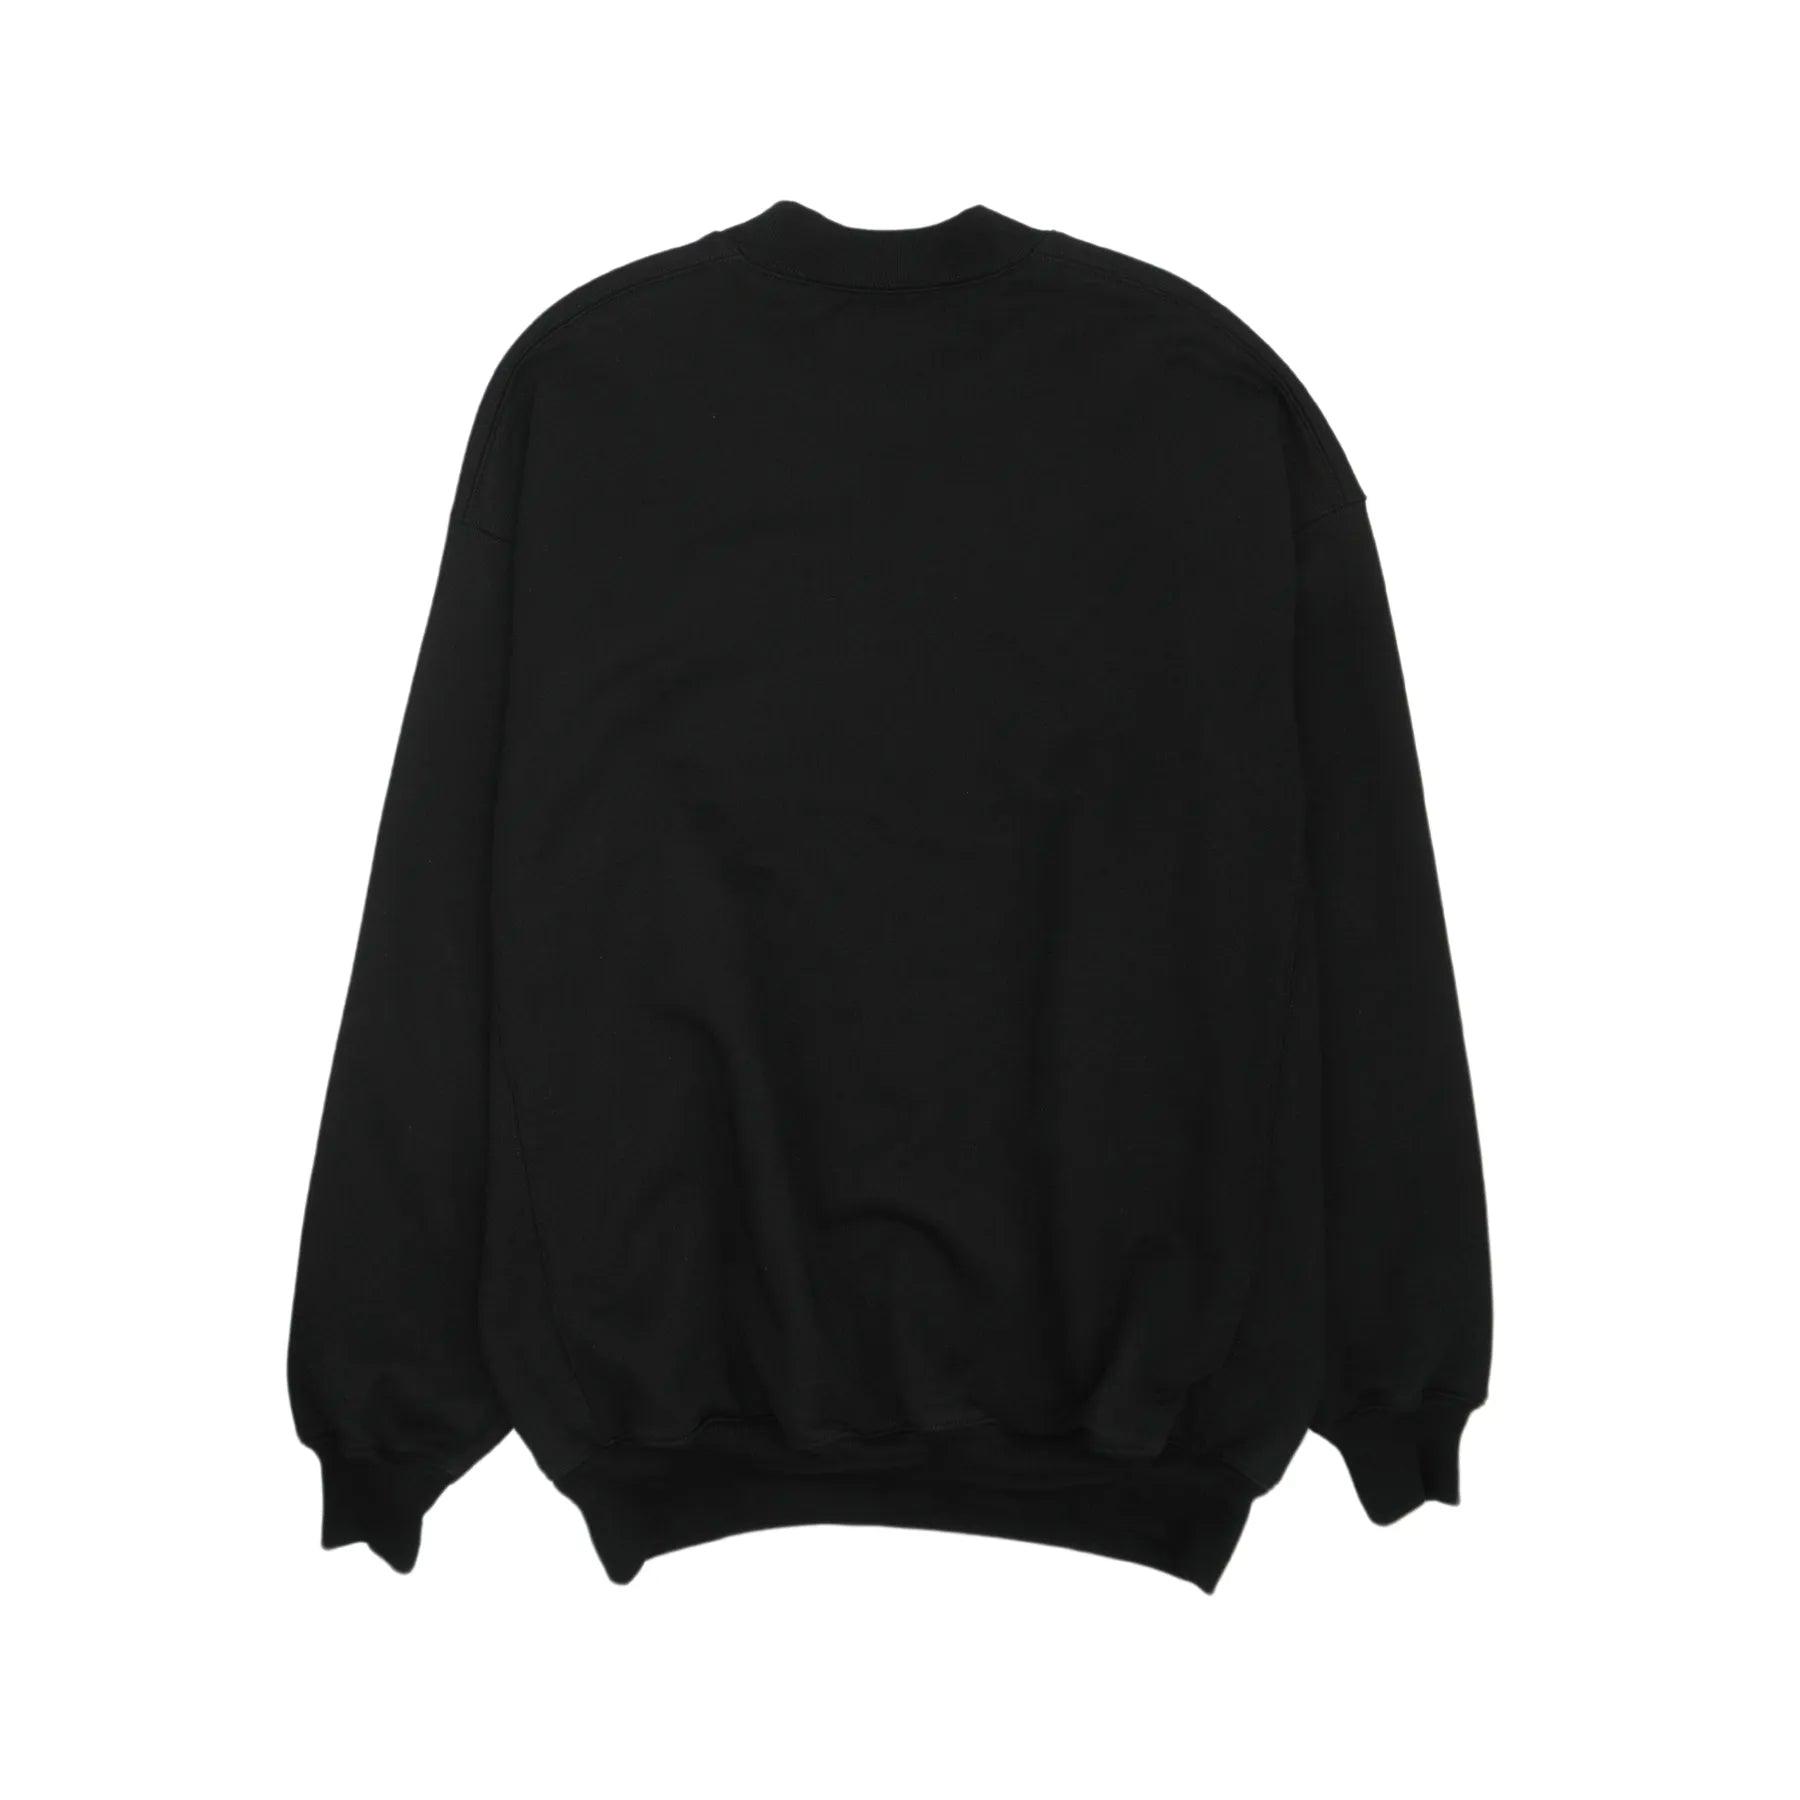 Balenciaga Sweater - Men's XS - Fashionably Yours